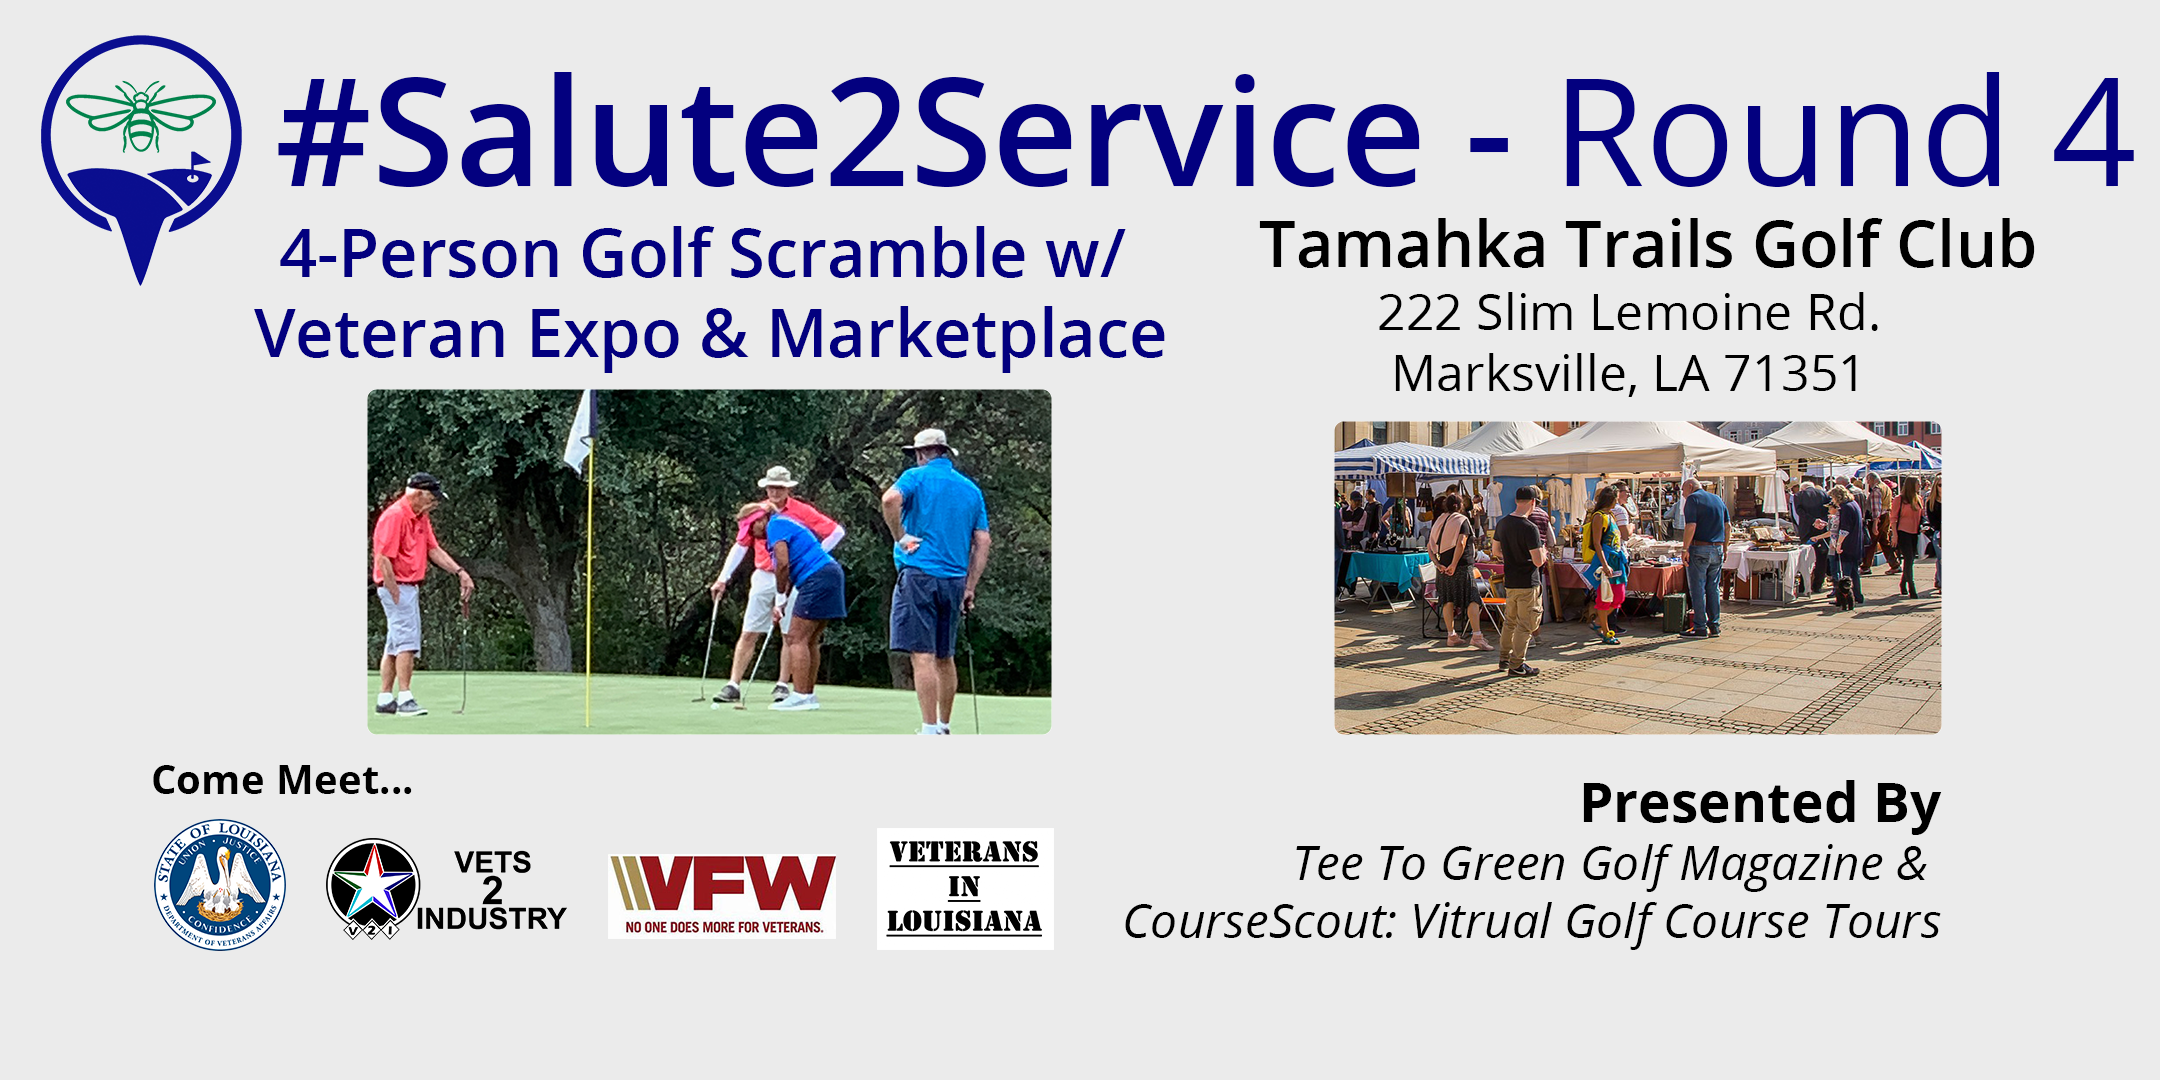 #Salute2Service | Golf Scramble w/ Veteran Expo & Marketplace - Round 4